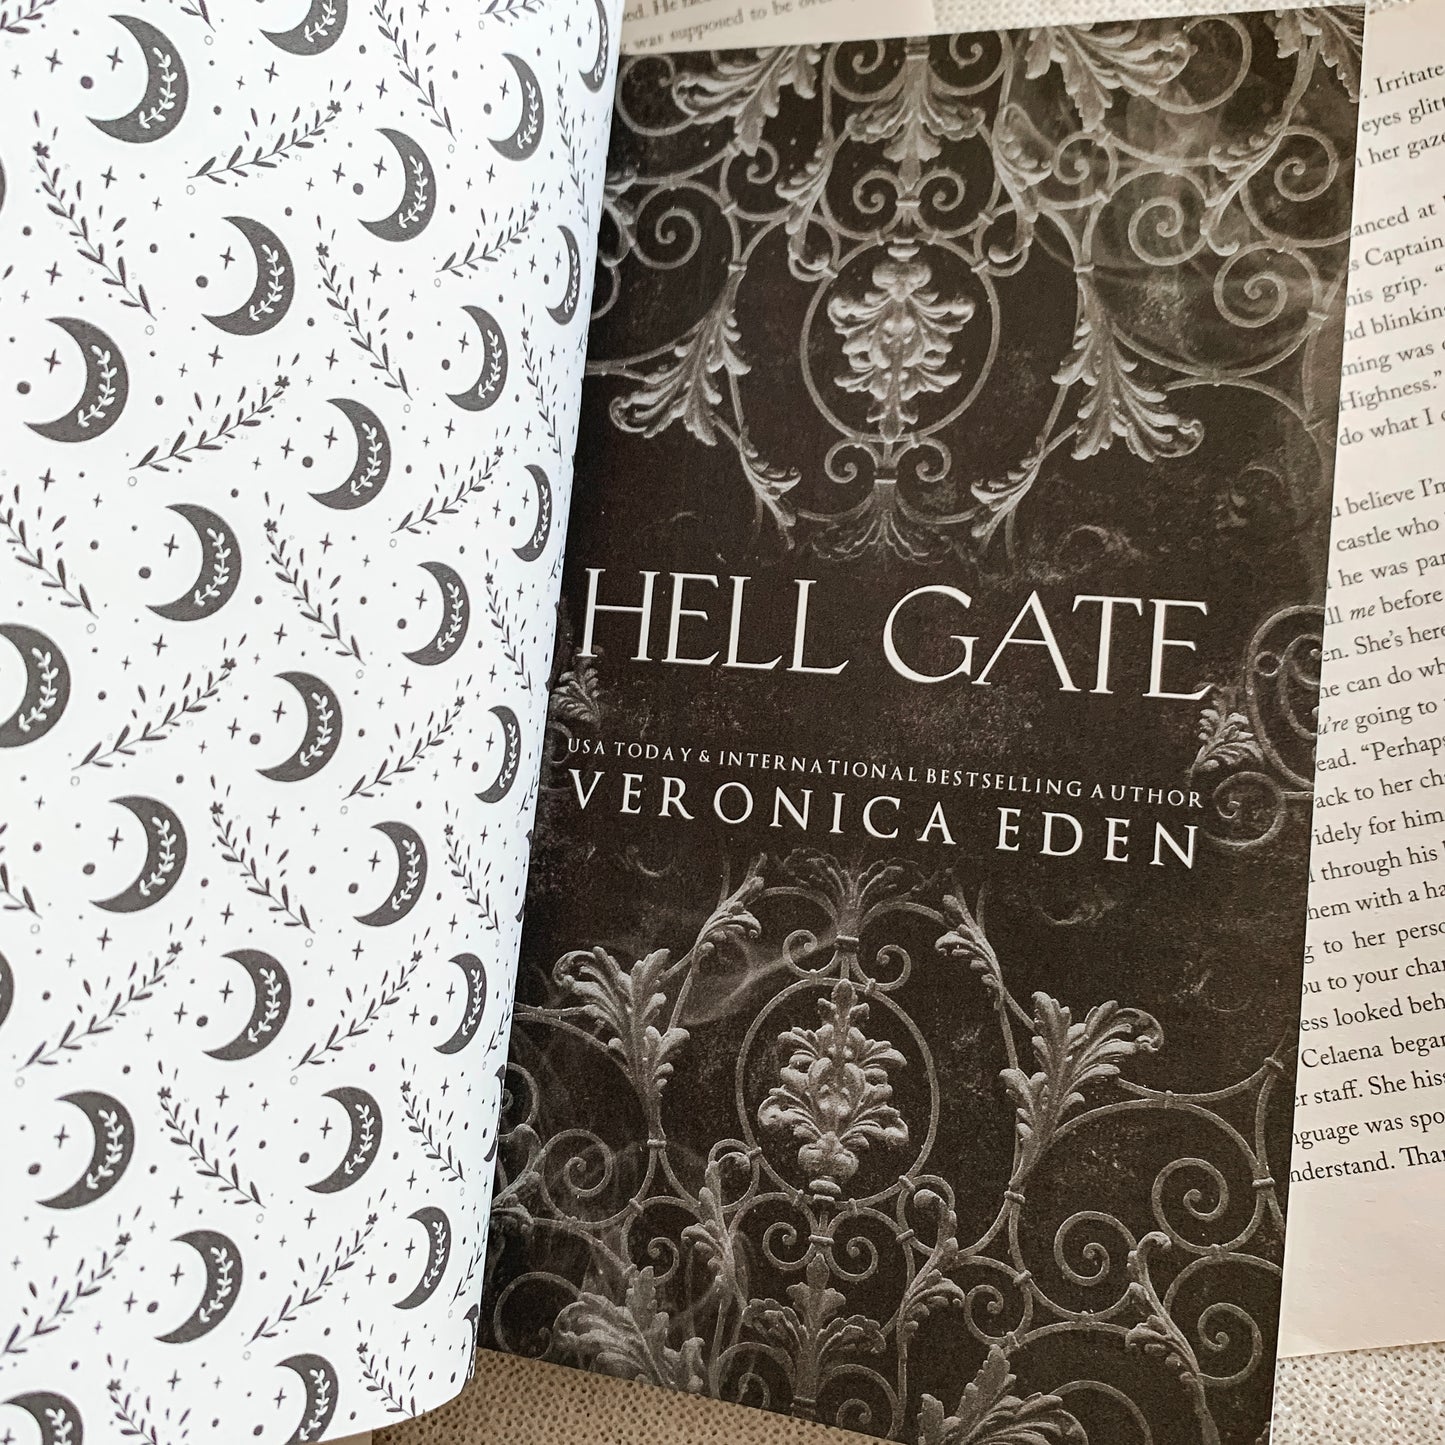 Hell Gate by Veronica Eden